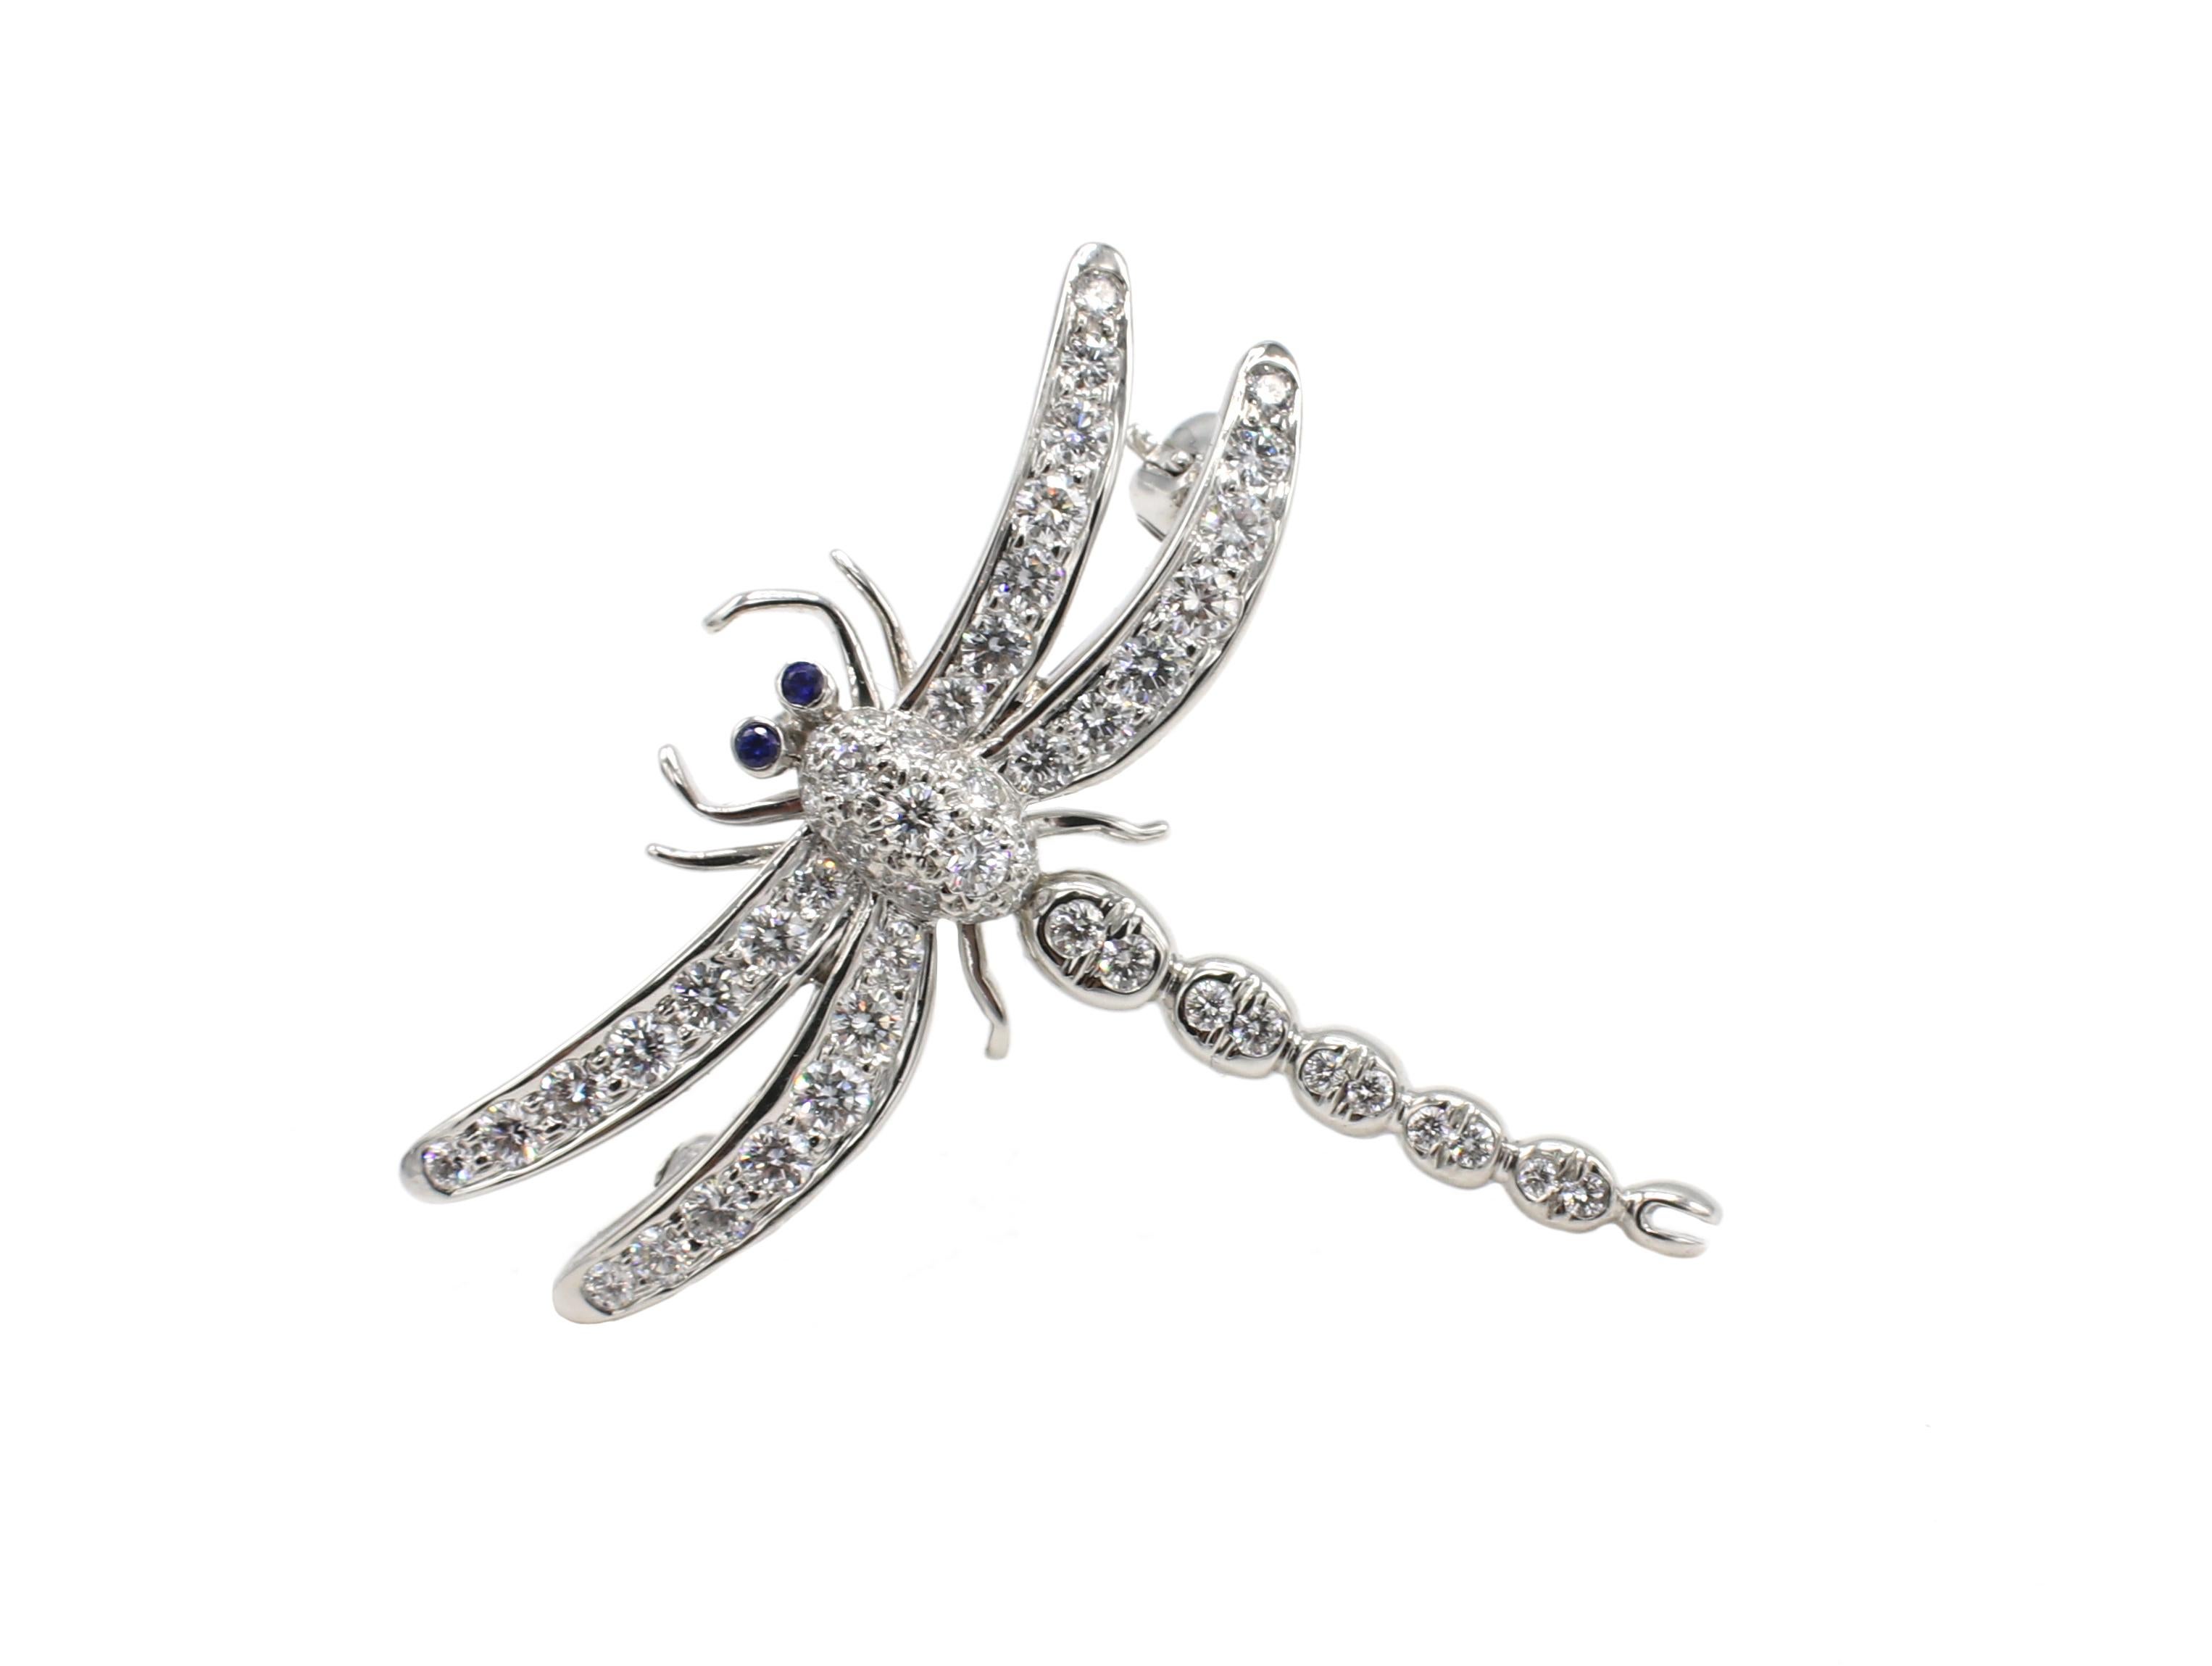 Tiffany & Co. Enchant Platinum Diamond & Sapphire Dragonfly Pin Brooch 
Metal: Platinum
Weight: 5.58 grams
Diamonds: 51 round brilliant cut diamonds, approx. .70 CTW D-F VS 
Sapphires: 2 round blue sapphires approx. .01 CTW 
Length: 29MM
Width: